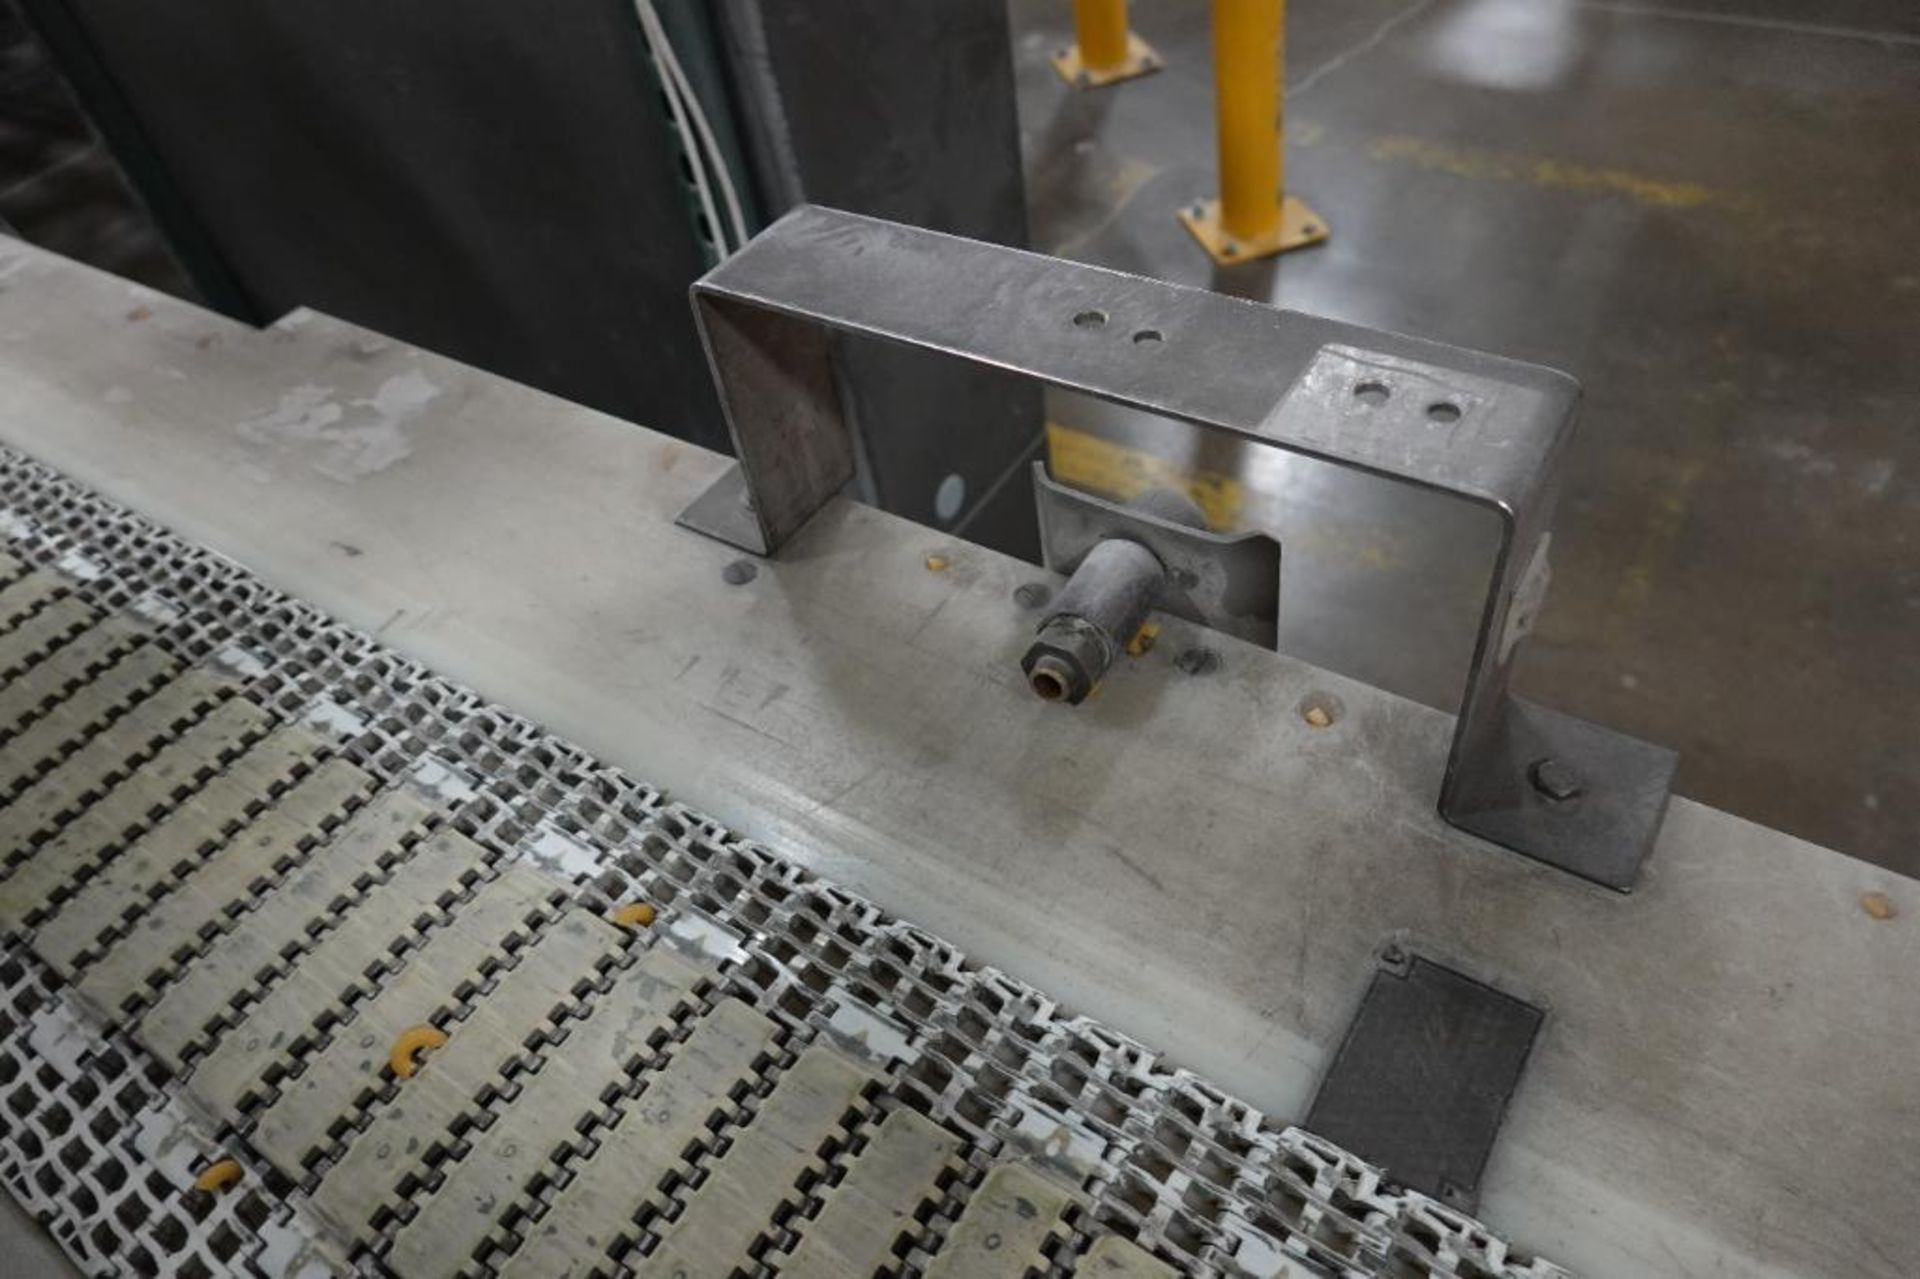 Safeline metal detector with conveyor - Image 7 of 12